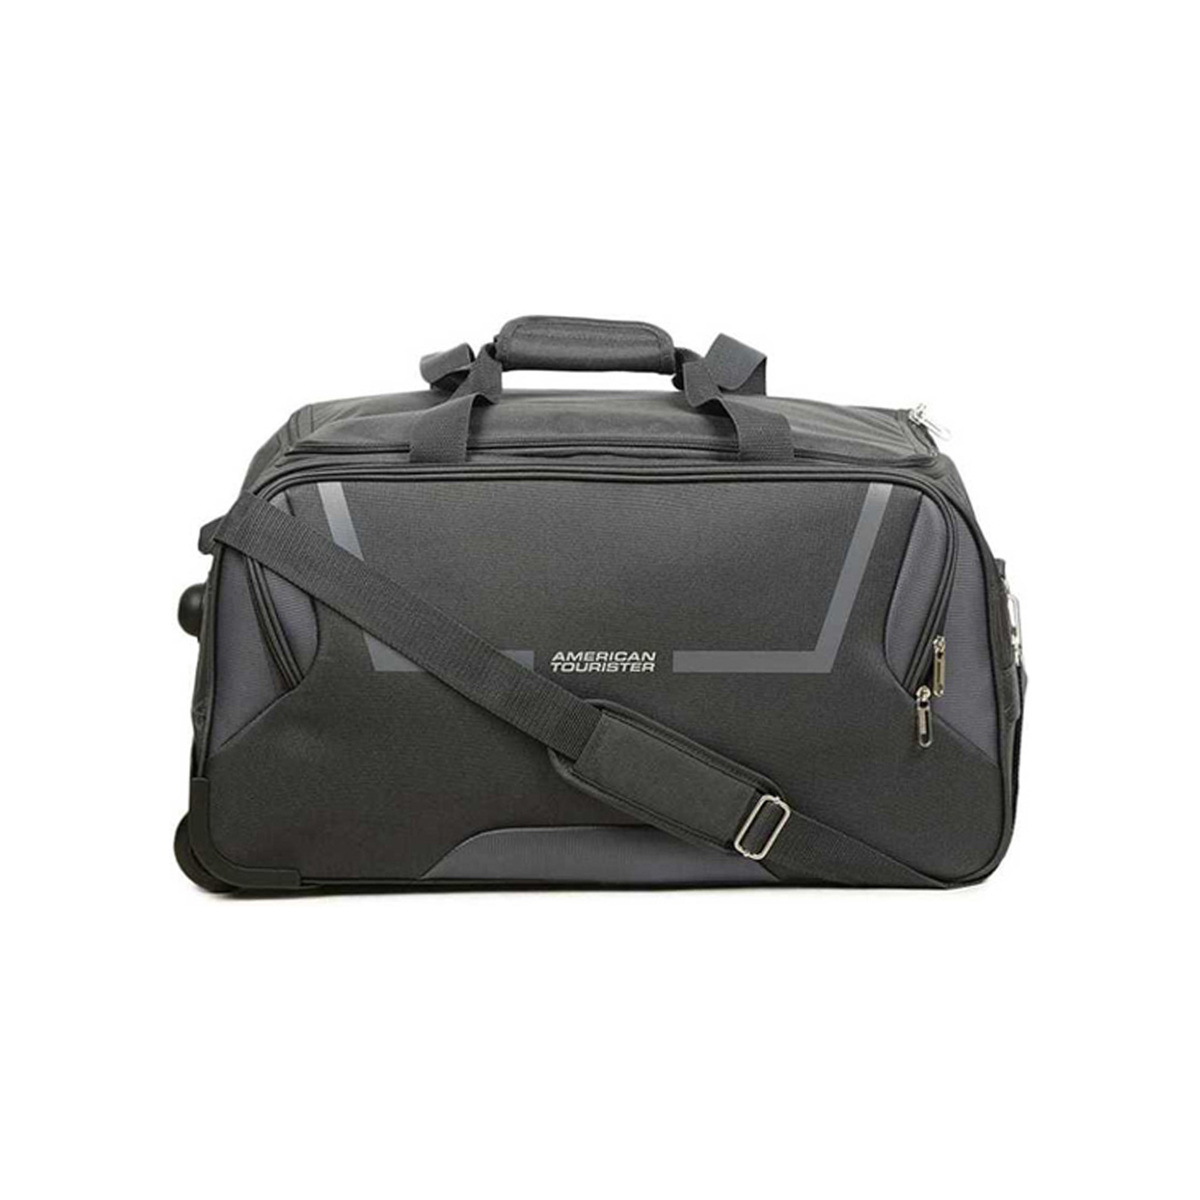 American Tourister Cosmo Duffle Bag, 57 cm, Grey